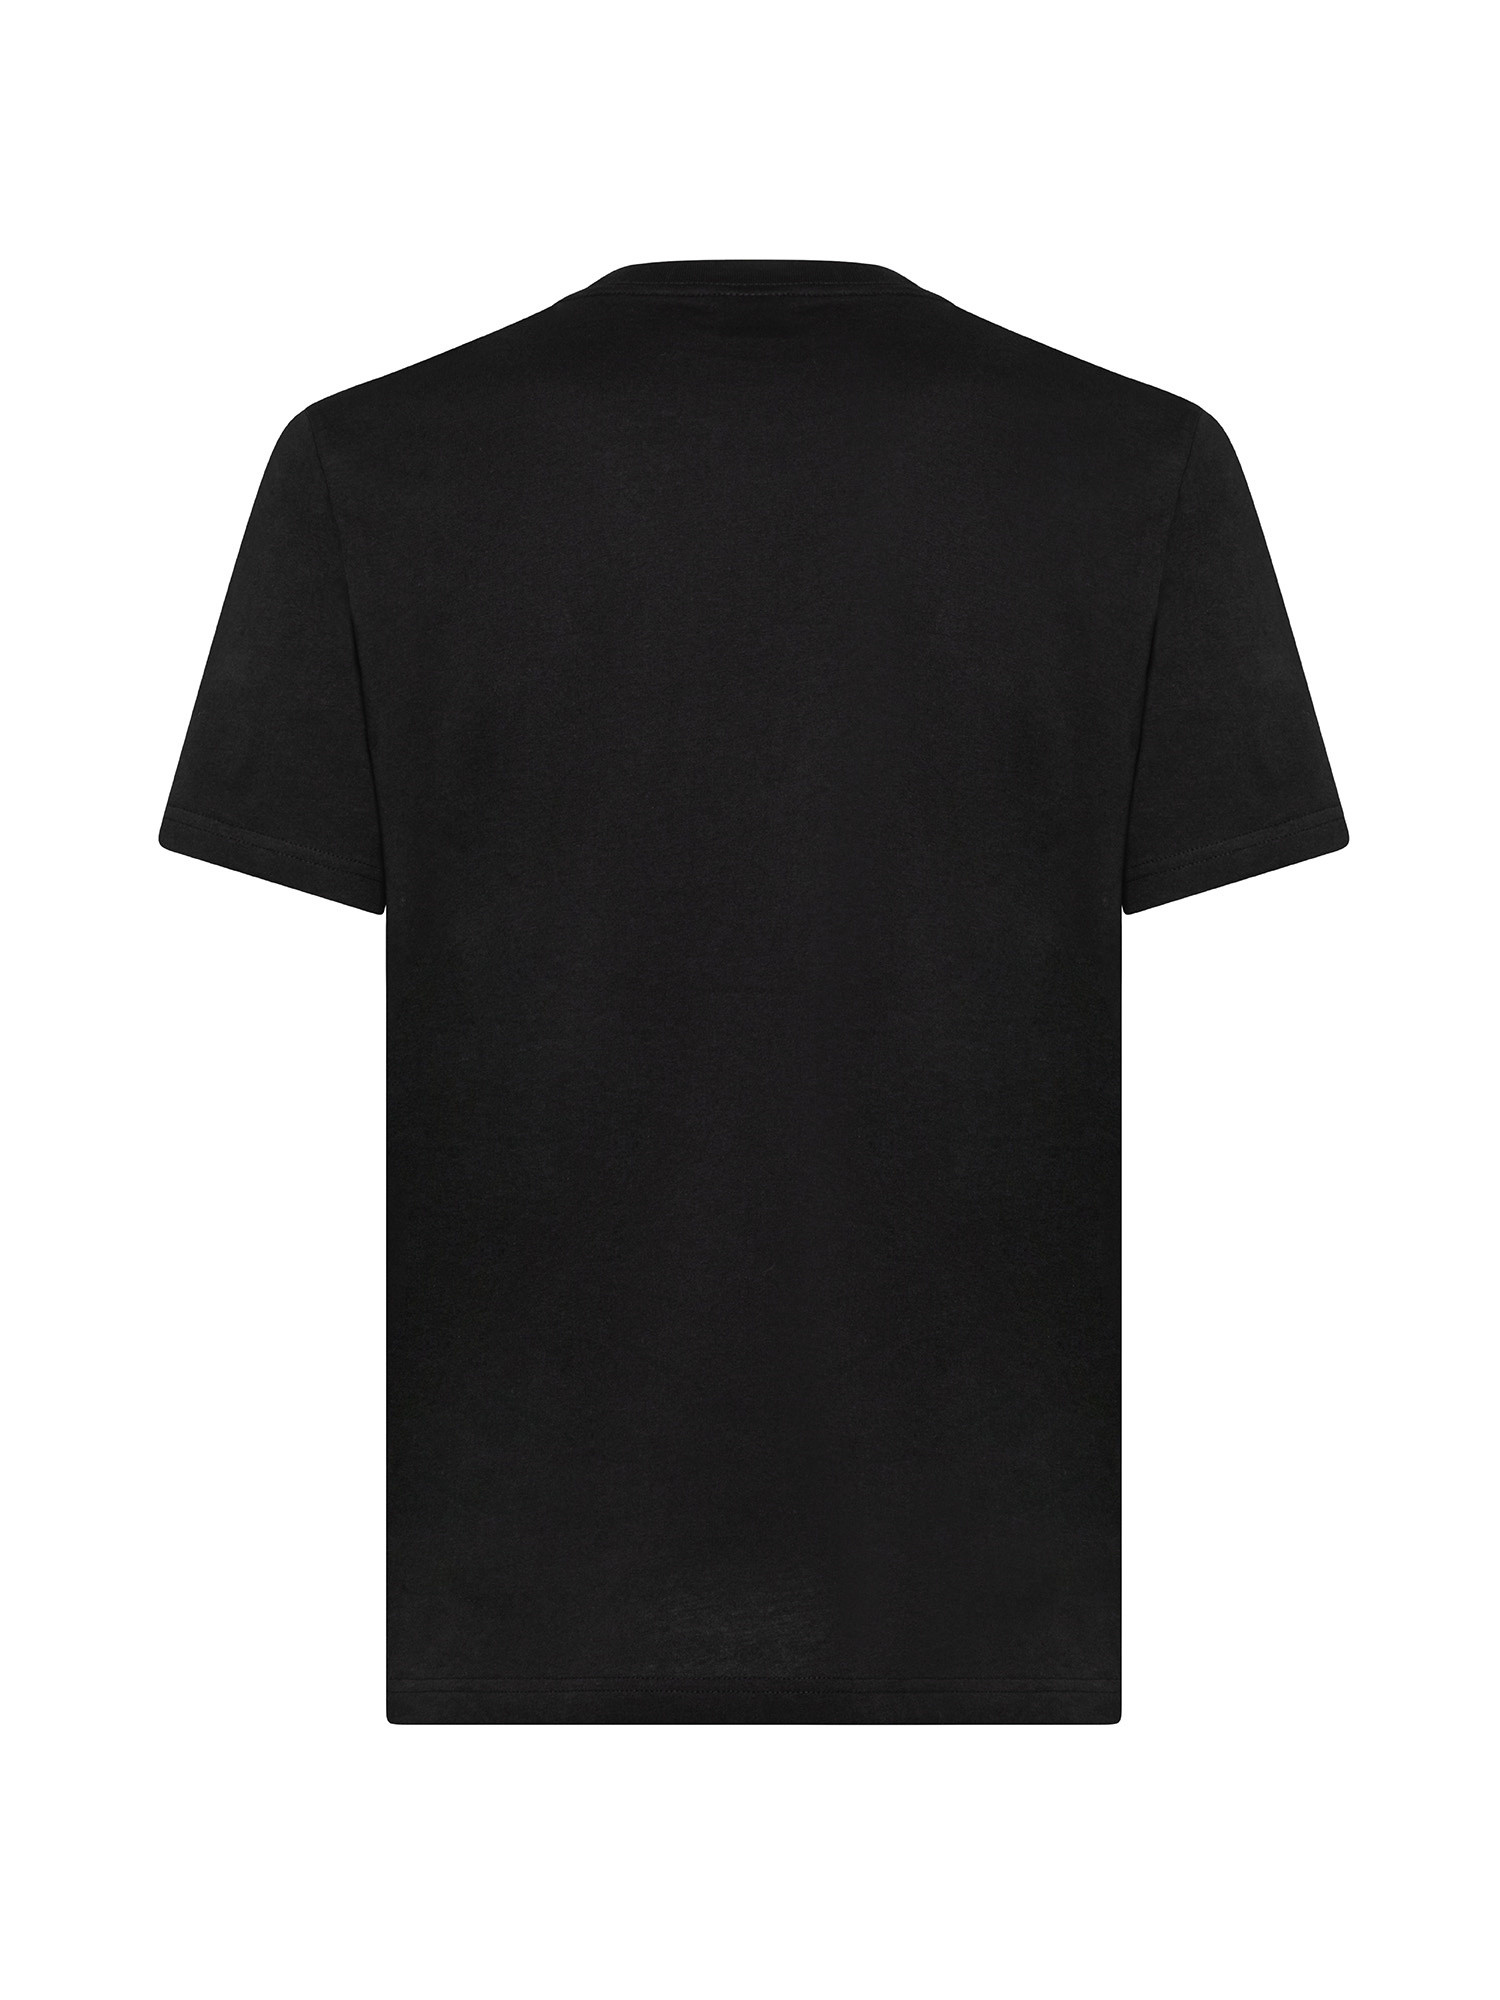 T-shirt con stampa, Nero, large image number 1